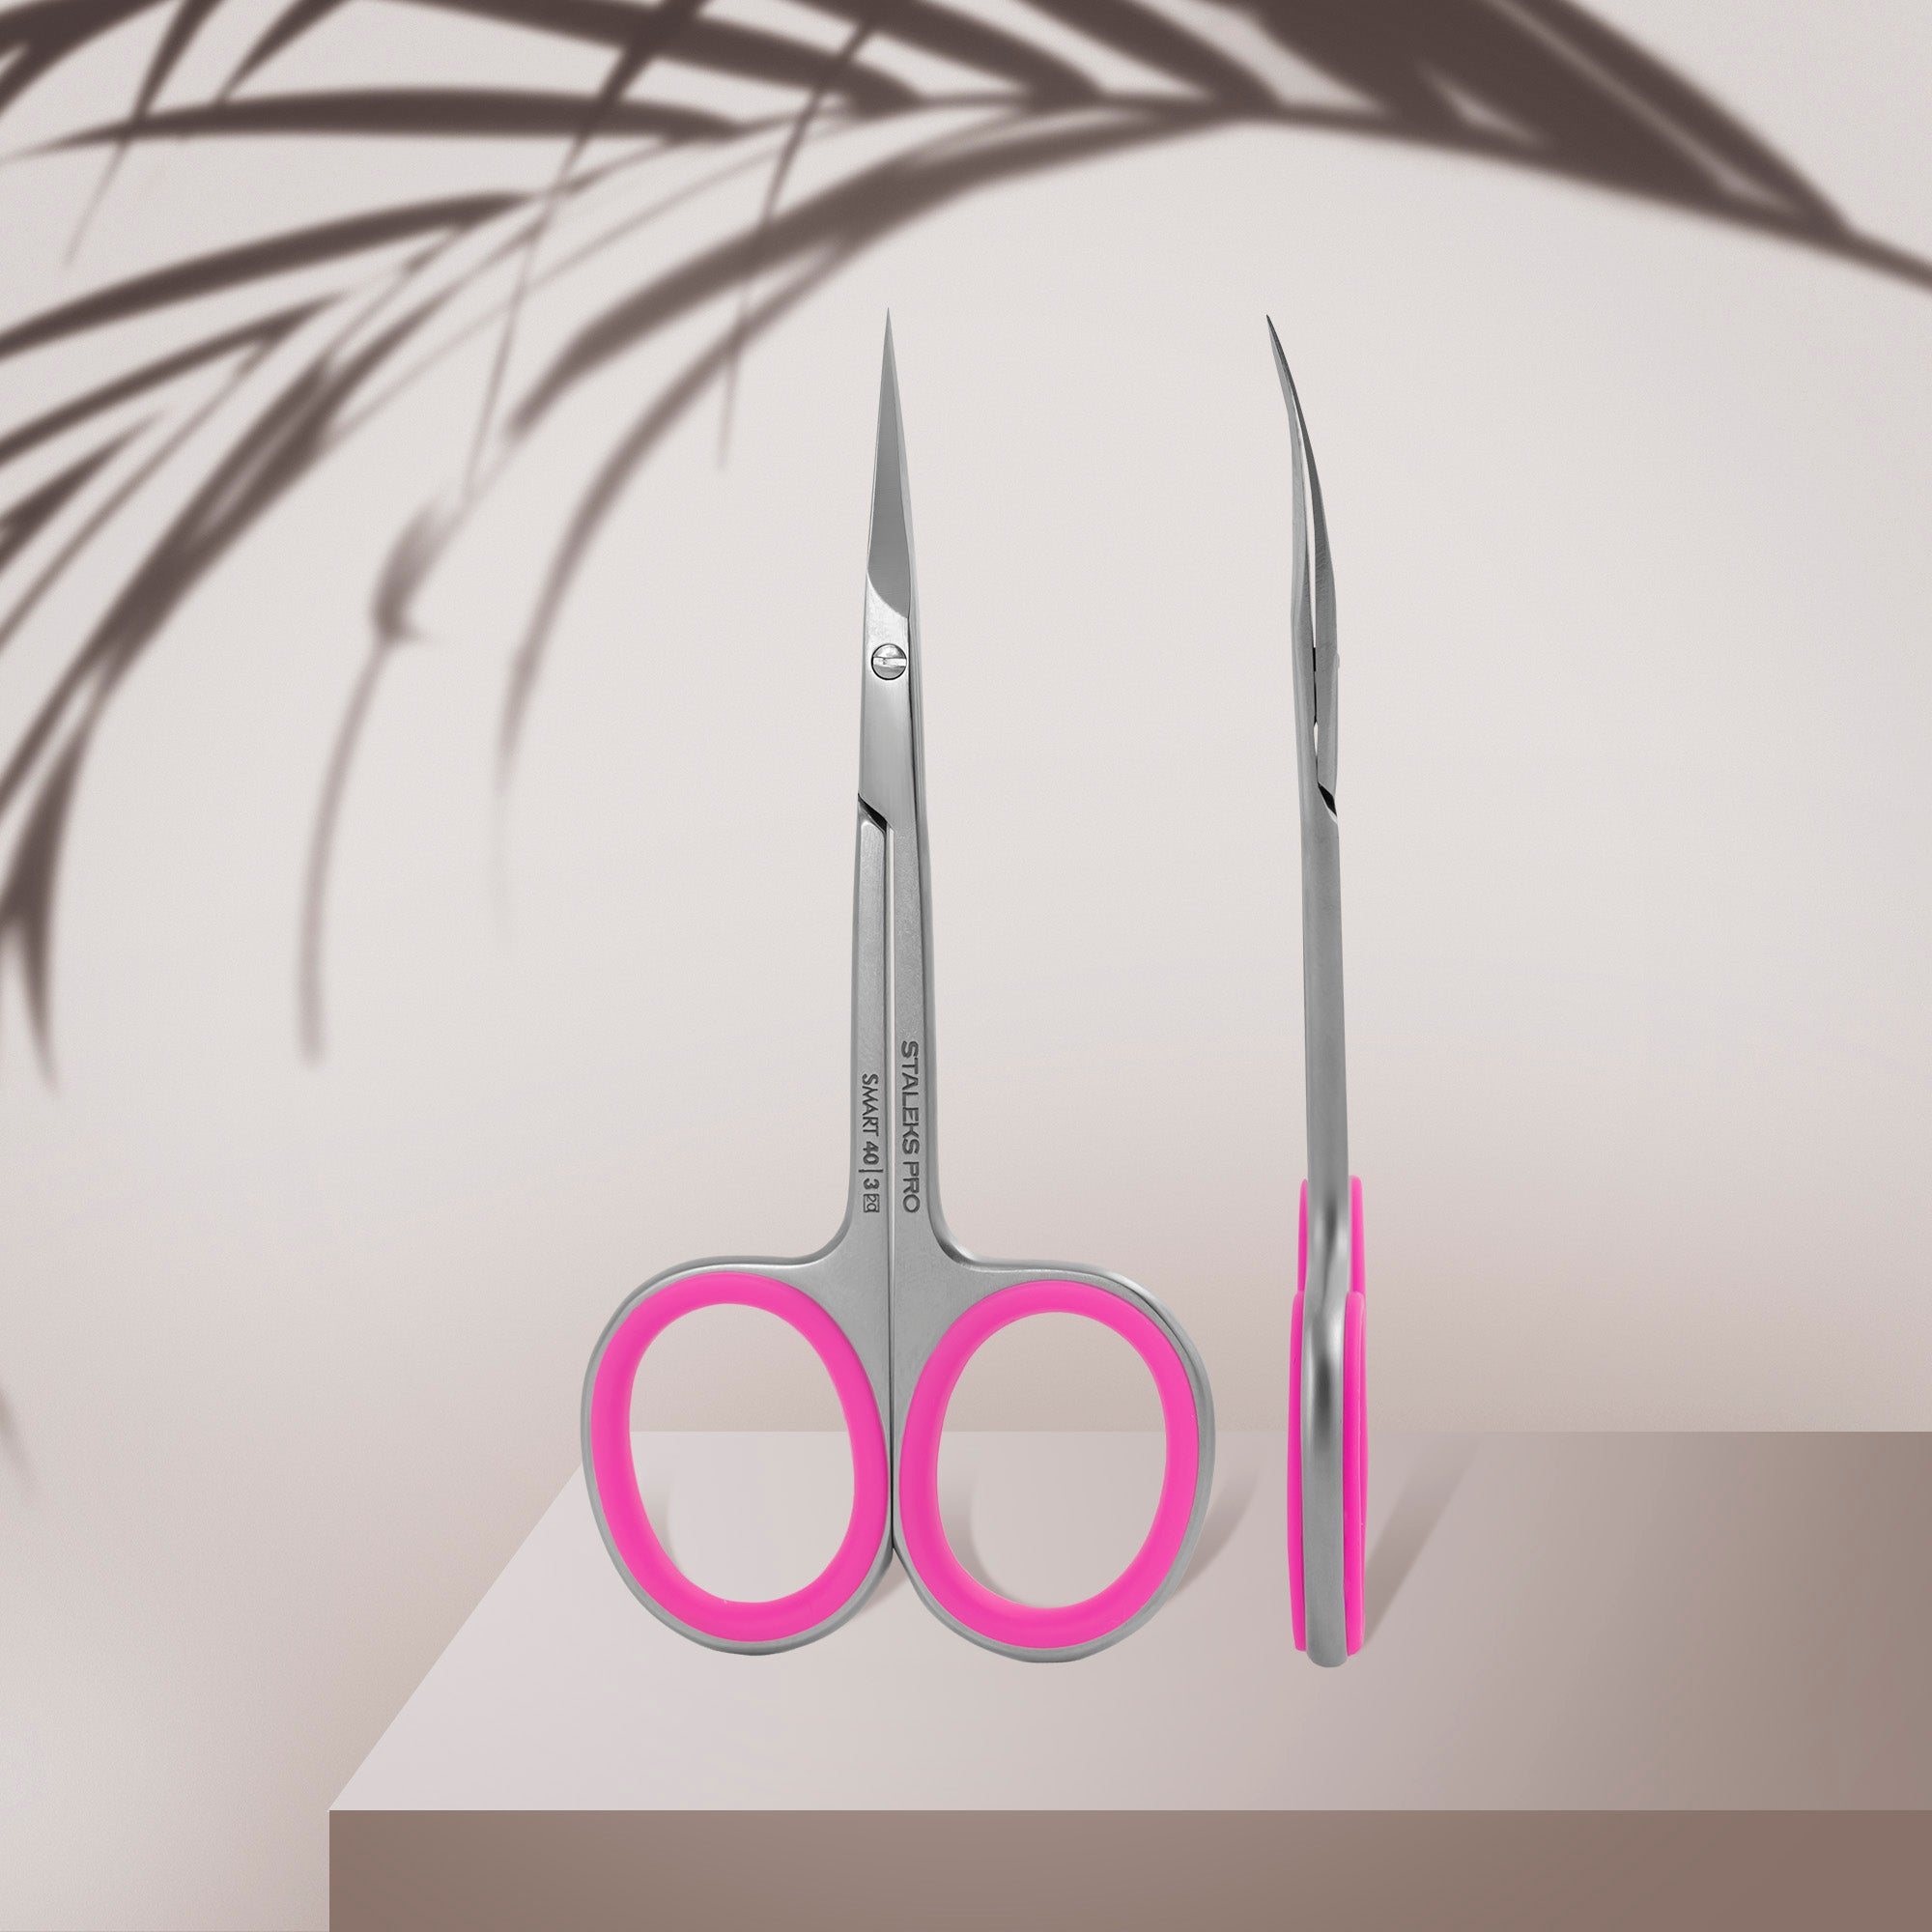 Staleks Pro Cuticle Scissors - Silicone Grip